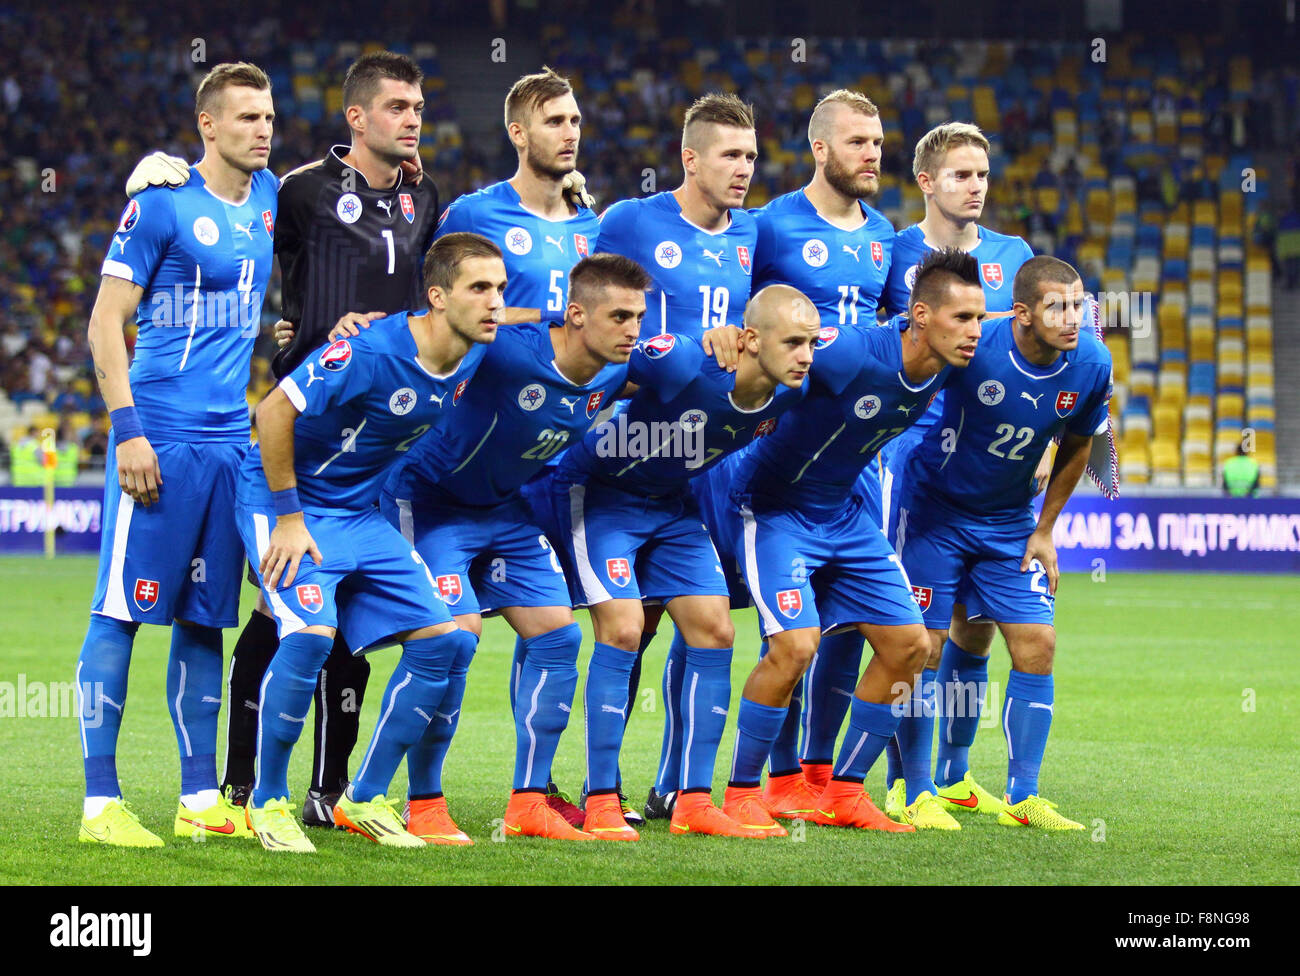 KYIV, UKRAINE - SEPTEMBER 8, 2014: Players of National football team of Slovakia pose for a group photo before UEFA EURO 2016 Qu Stock Photo